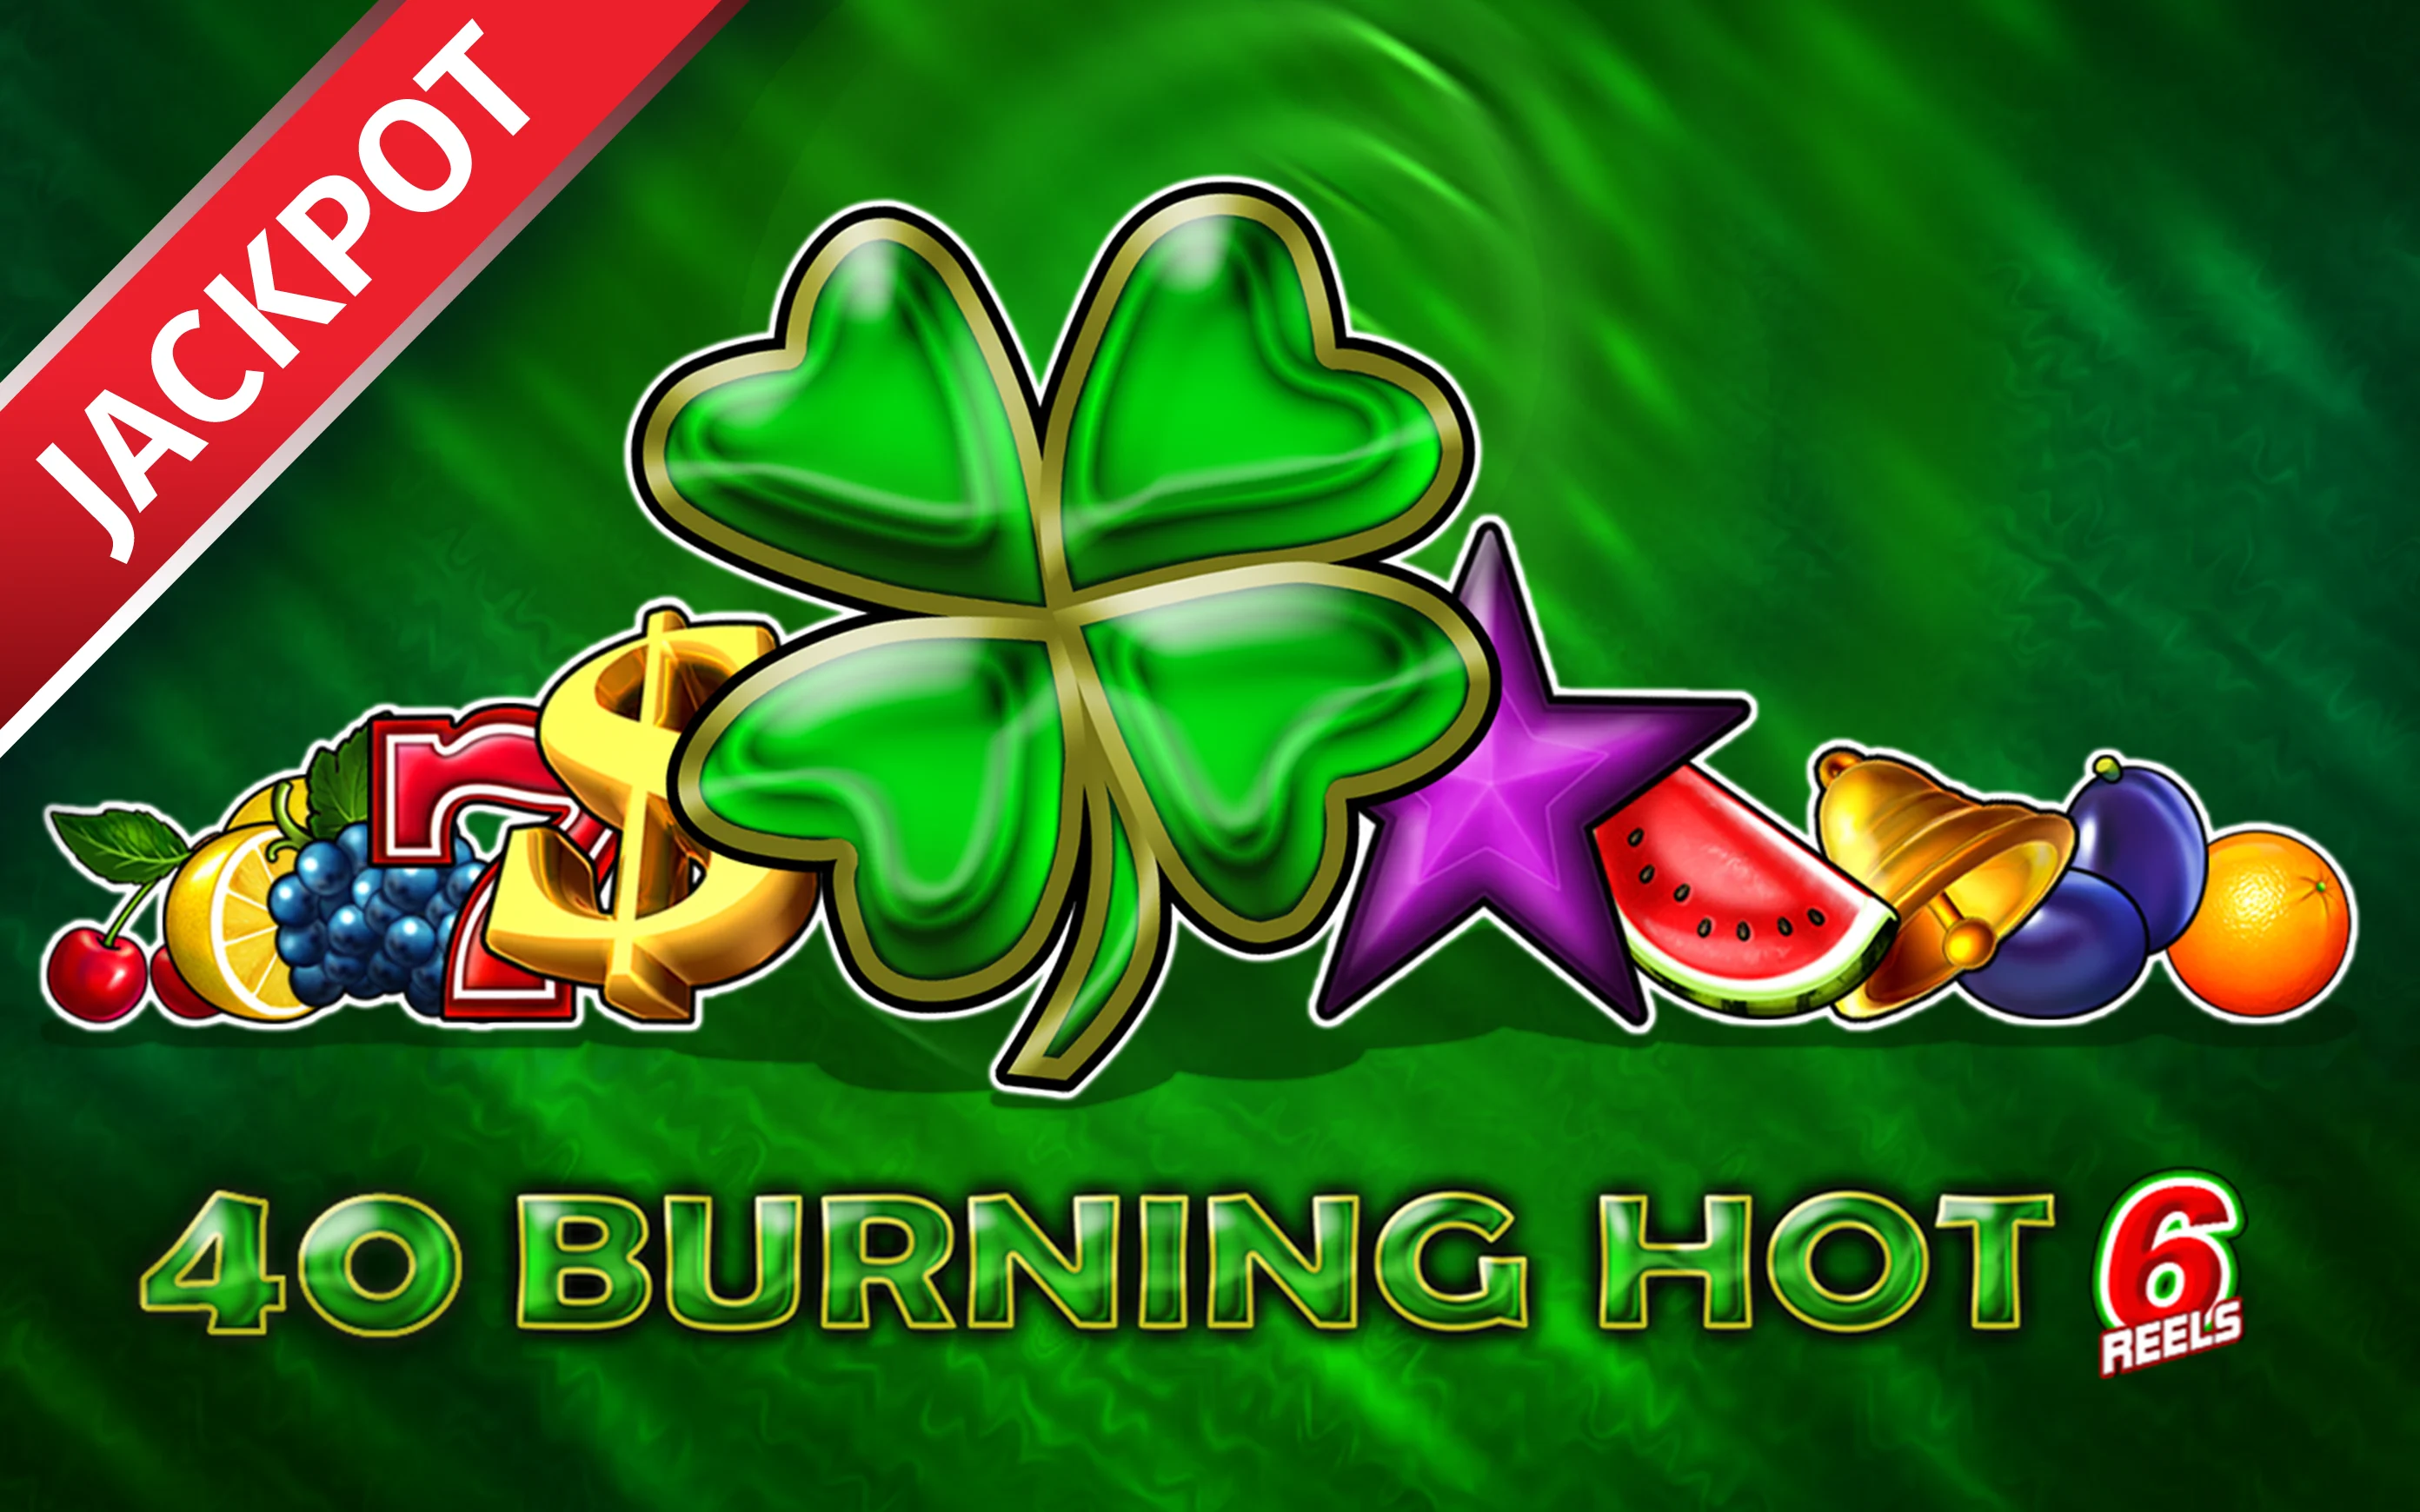 Gioca a 40 Burning Hot 6 Reels sul casino online Starcasino.be